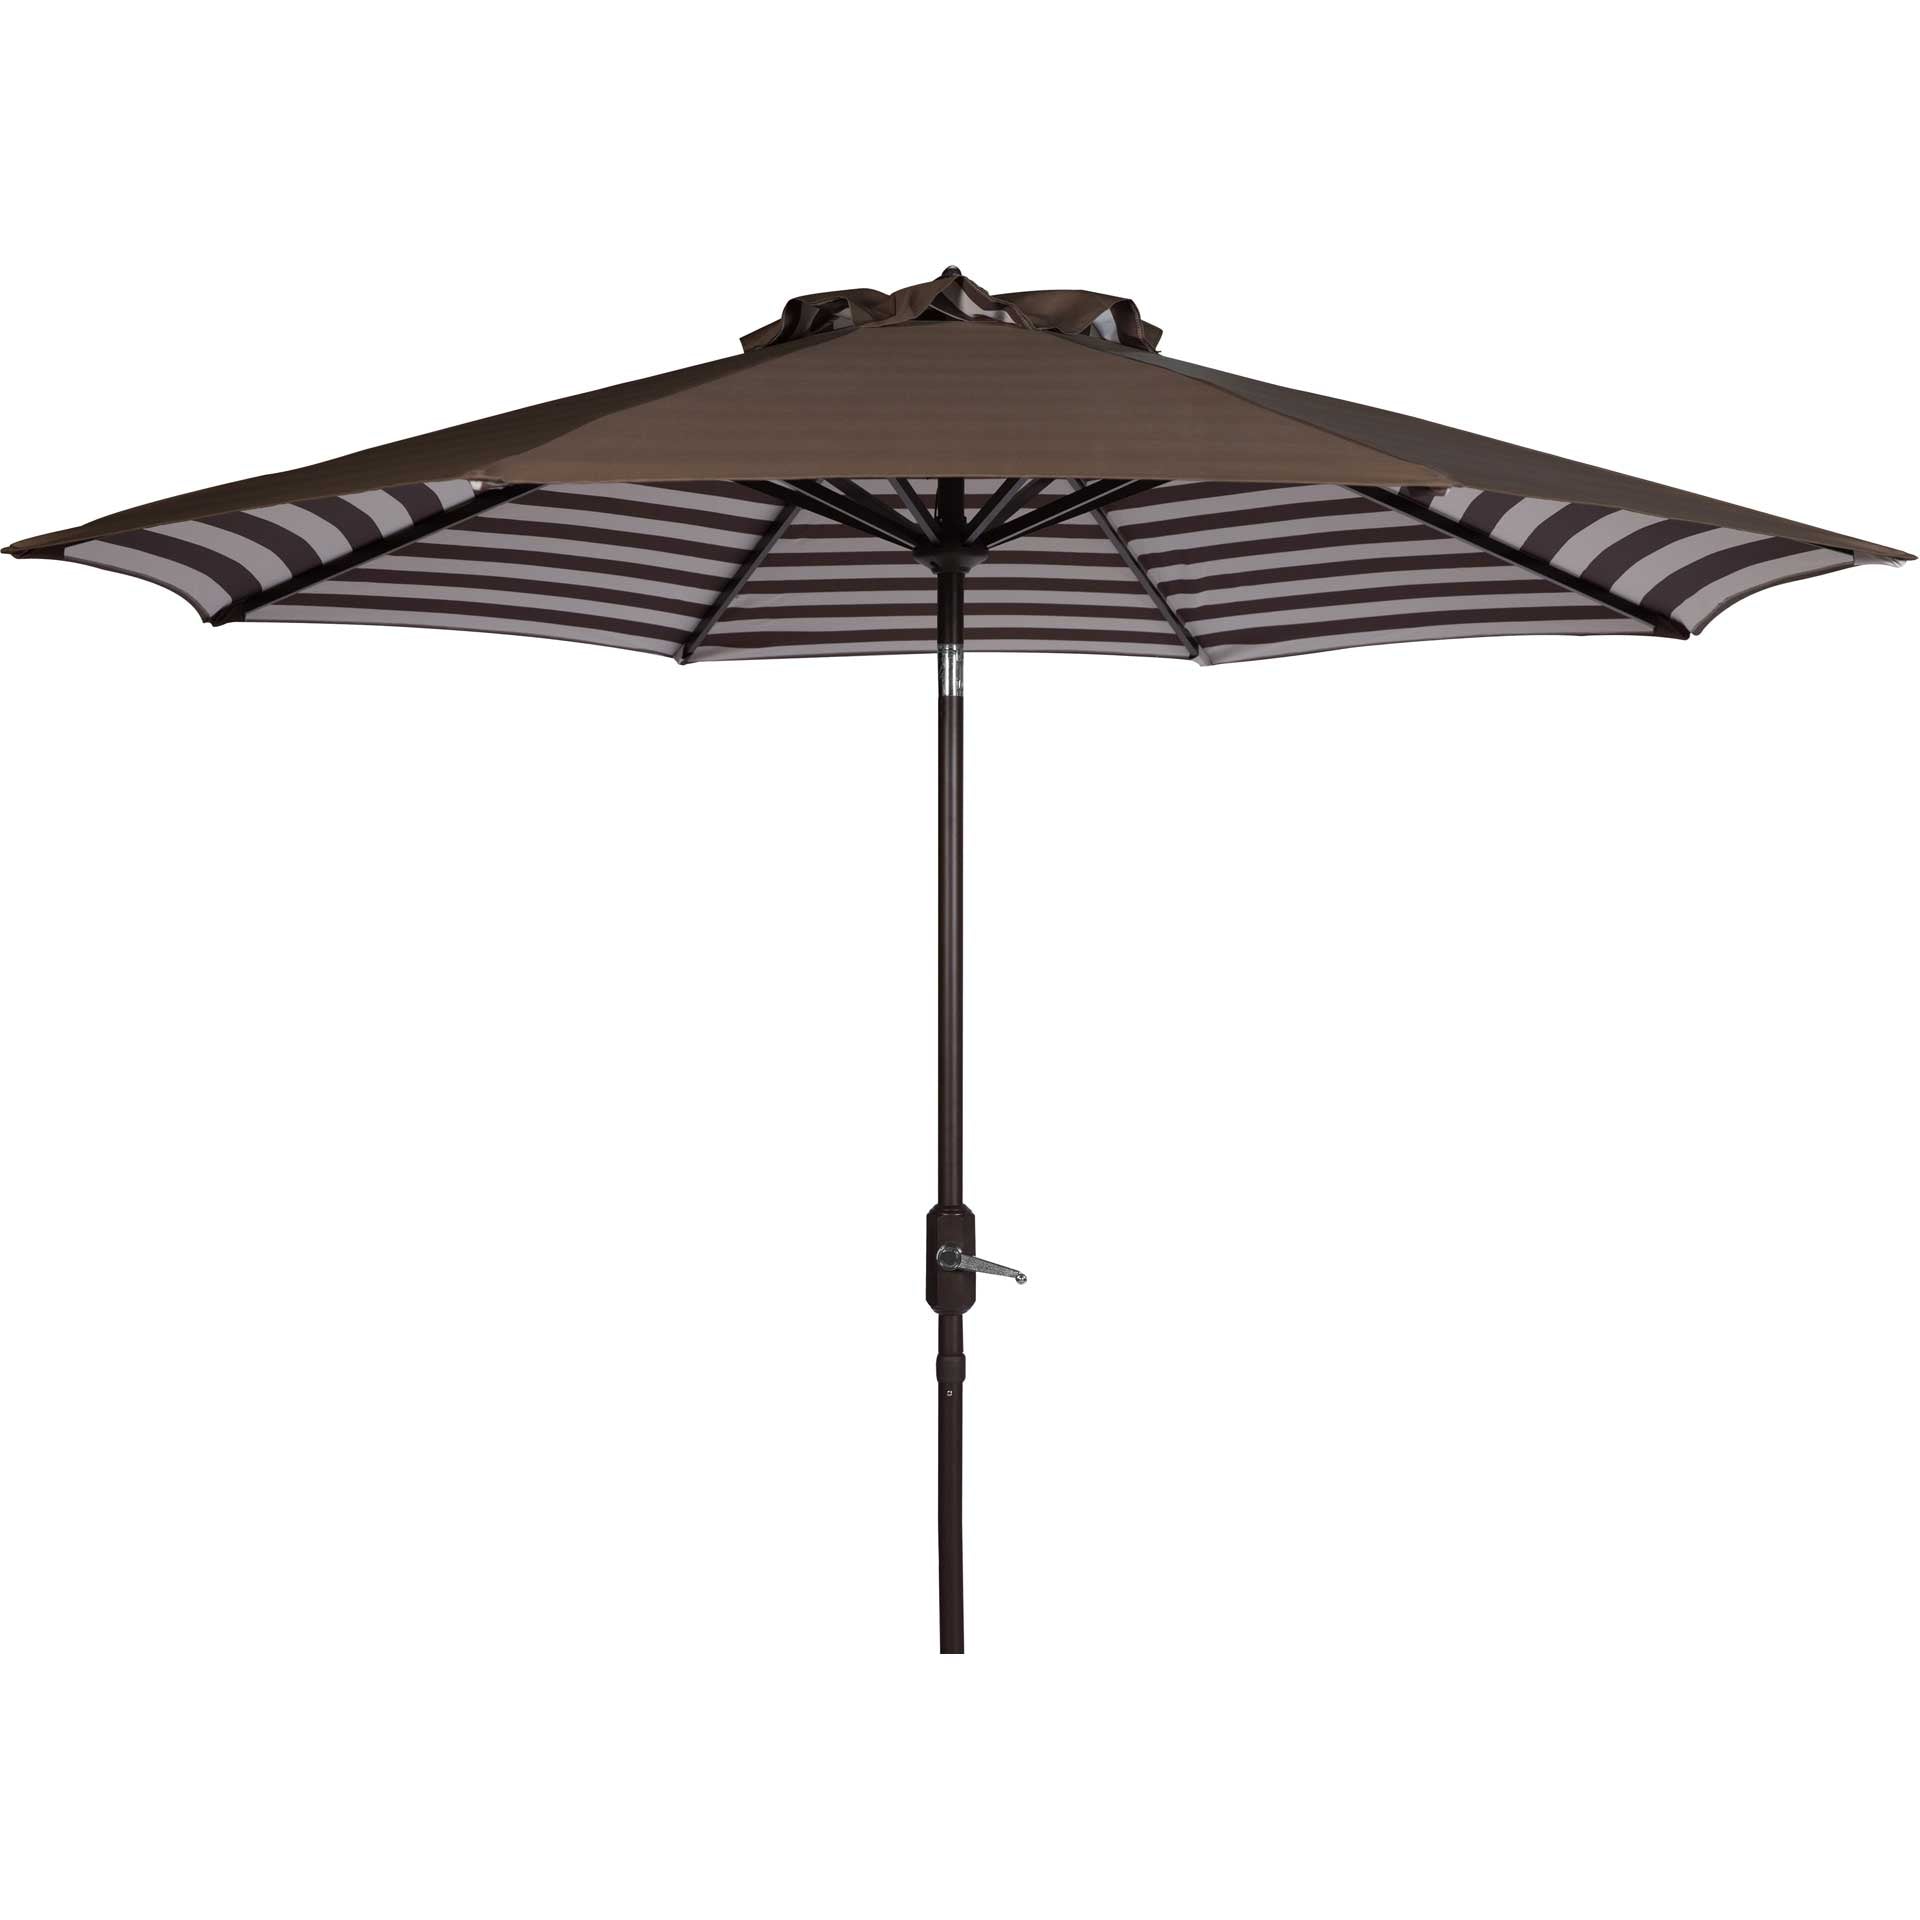 Atara Striped Outdoor Auto Tilt Umbrella Brown/White